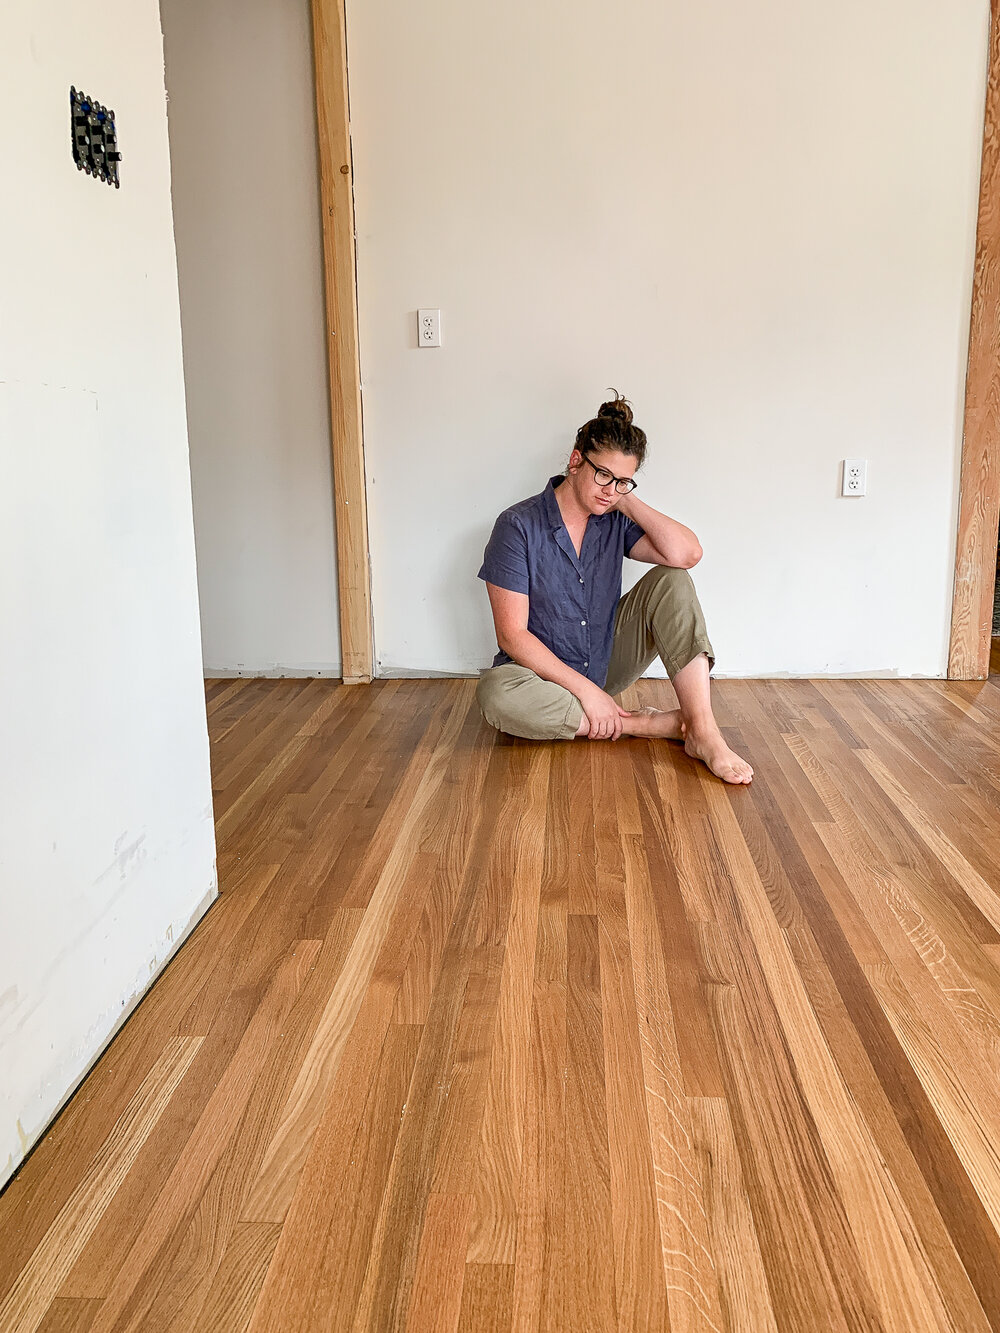 Refinish Our Floors Twice Diy Fail, Refinish Hardwood Floors Diy Or Professional